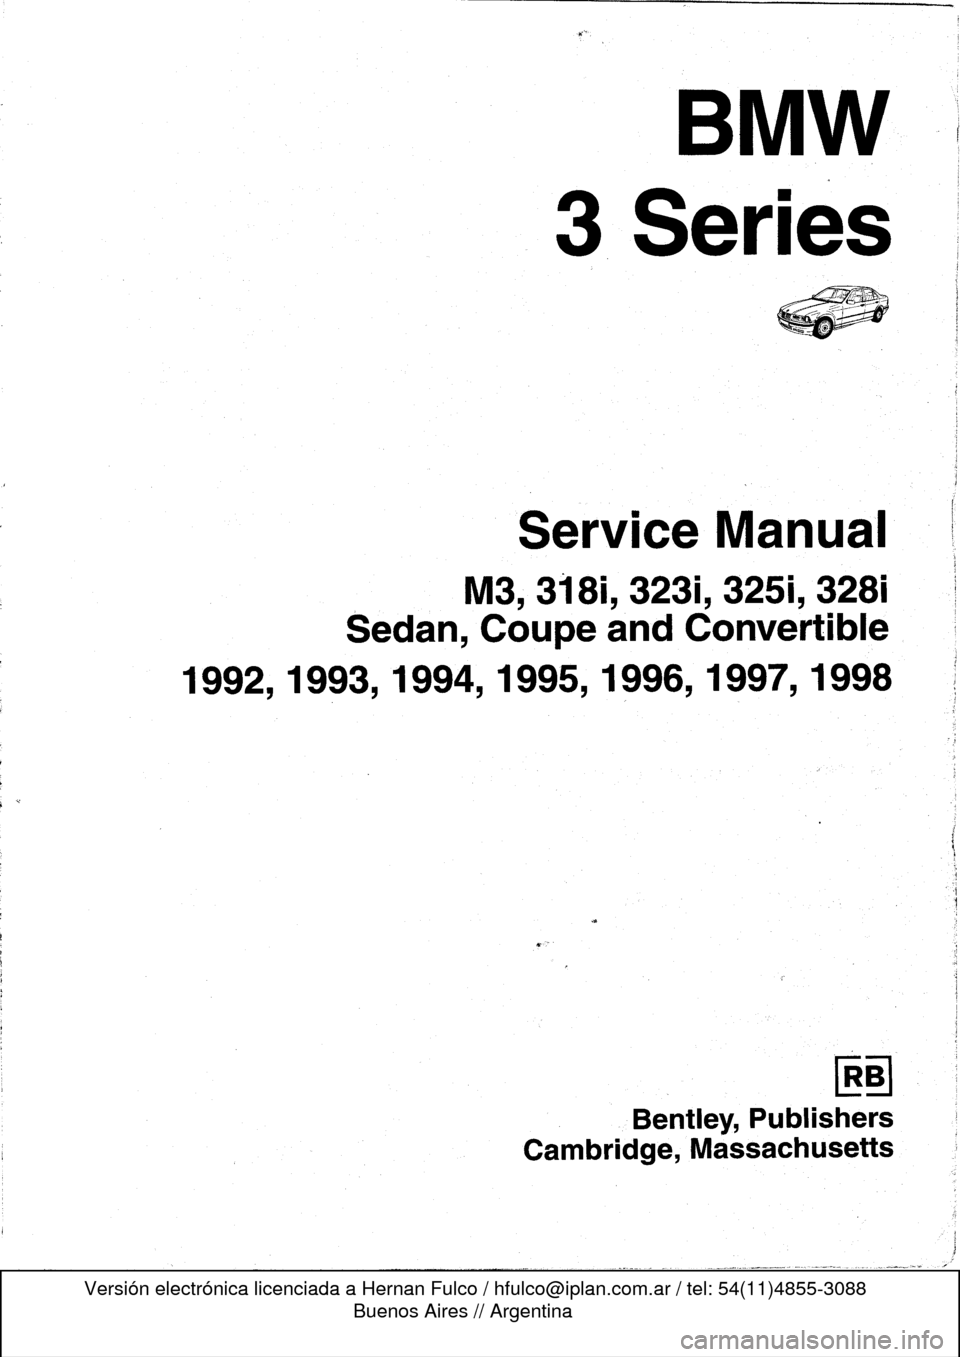 BMW 318i 1996 E36 Workshop Manual 
B
mw

3
Series

M3,
3181,3231,3251,
3281

Sedan,
Coupe
and
Convertible

1992,1993,1994,1995,
1996,1997,
1998

Bentley,
Publishers

Cambridge,
Massachusetts 